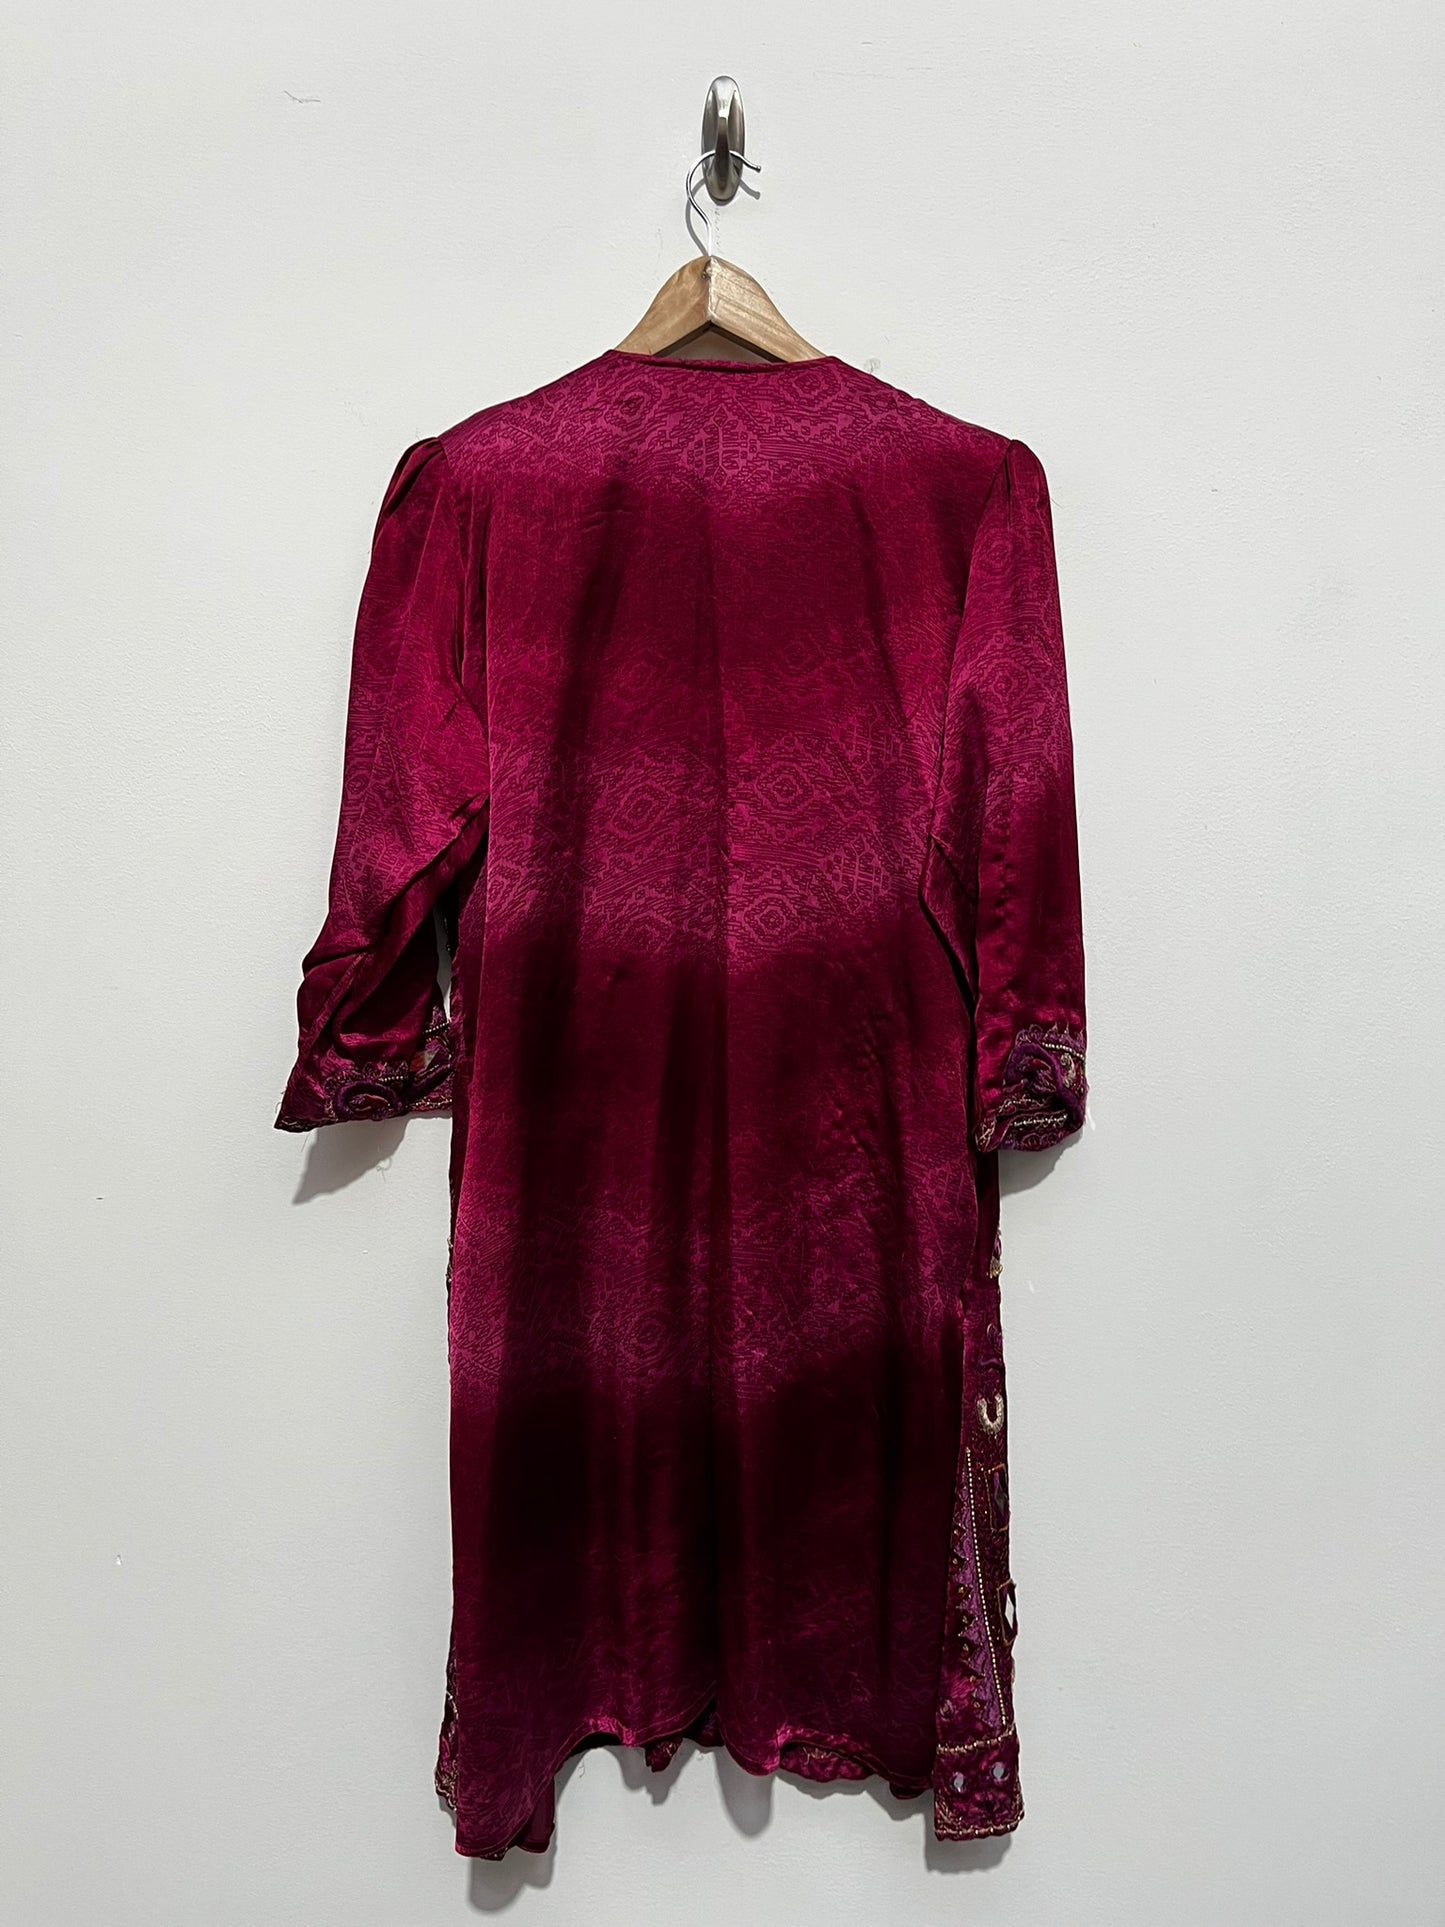 Maroon mirrored kaftan tunic dress Traditional Eastern Asian Moroccan Hippie Size M